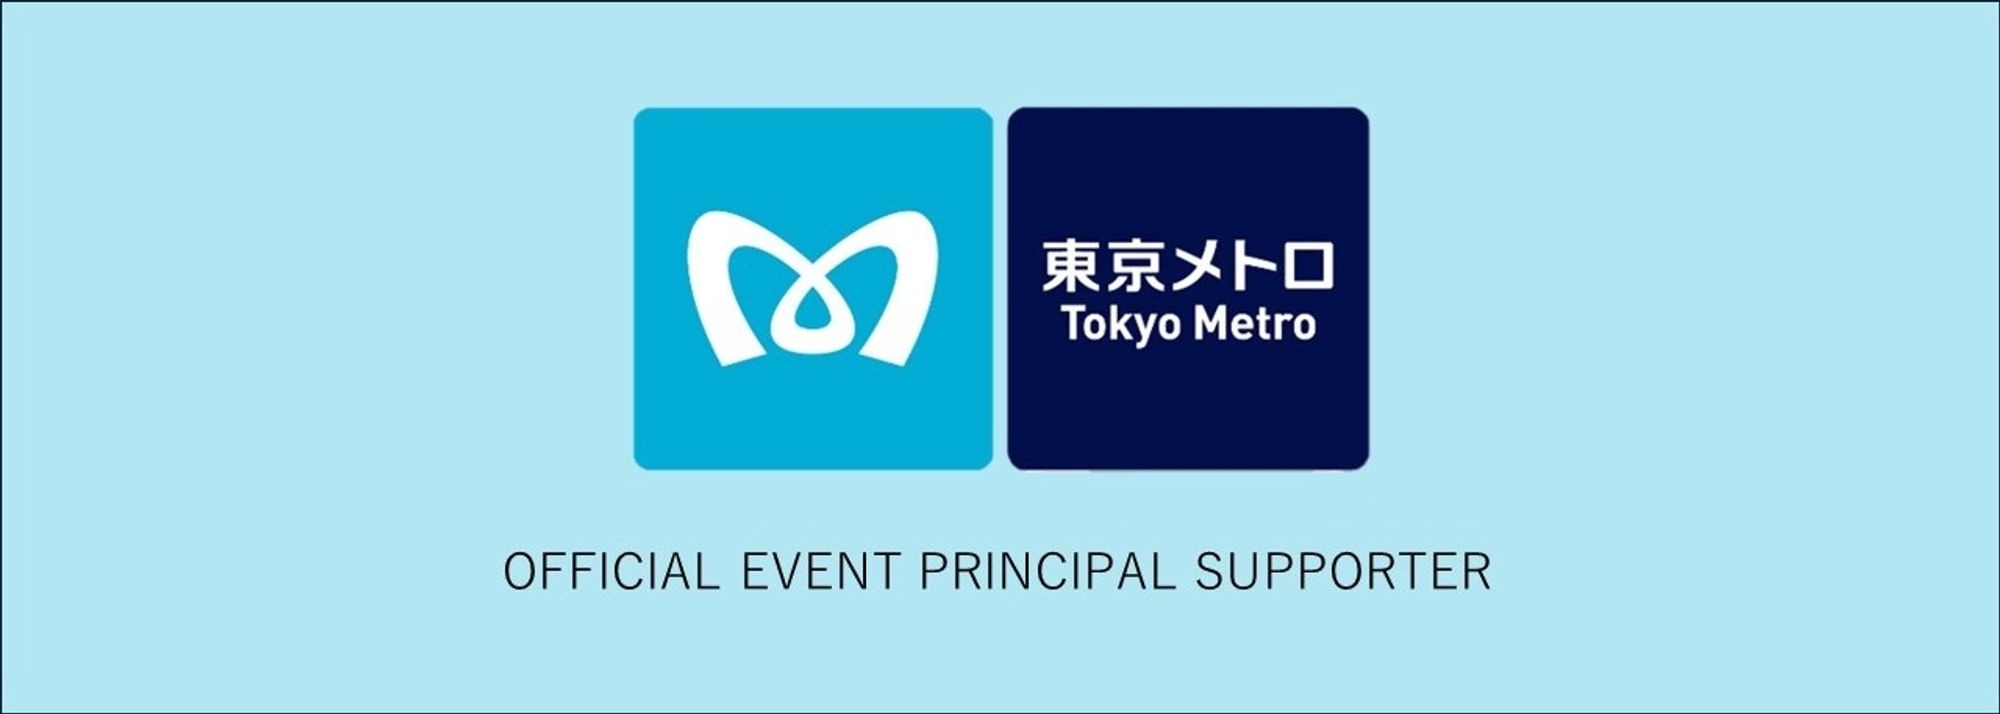 Tokyo Metro Co., Ltd. has been announced today as an Official Event Principal Supporter 